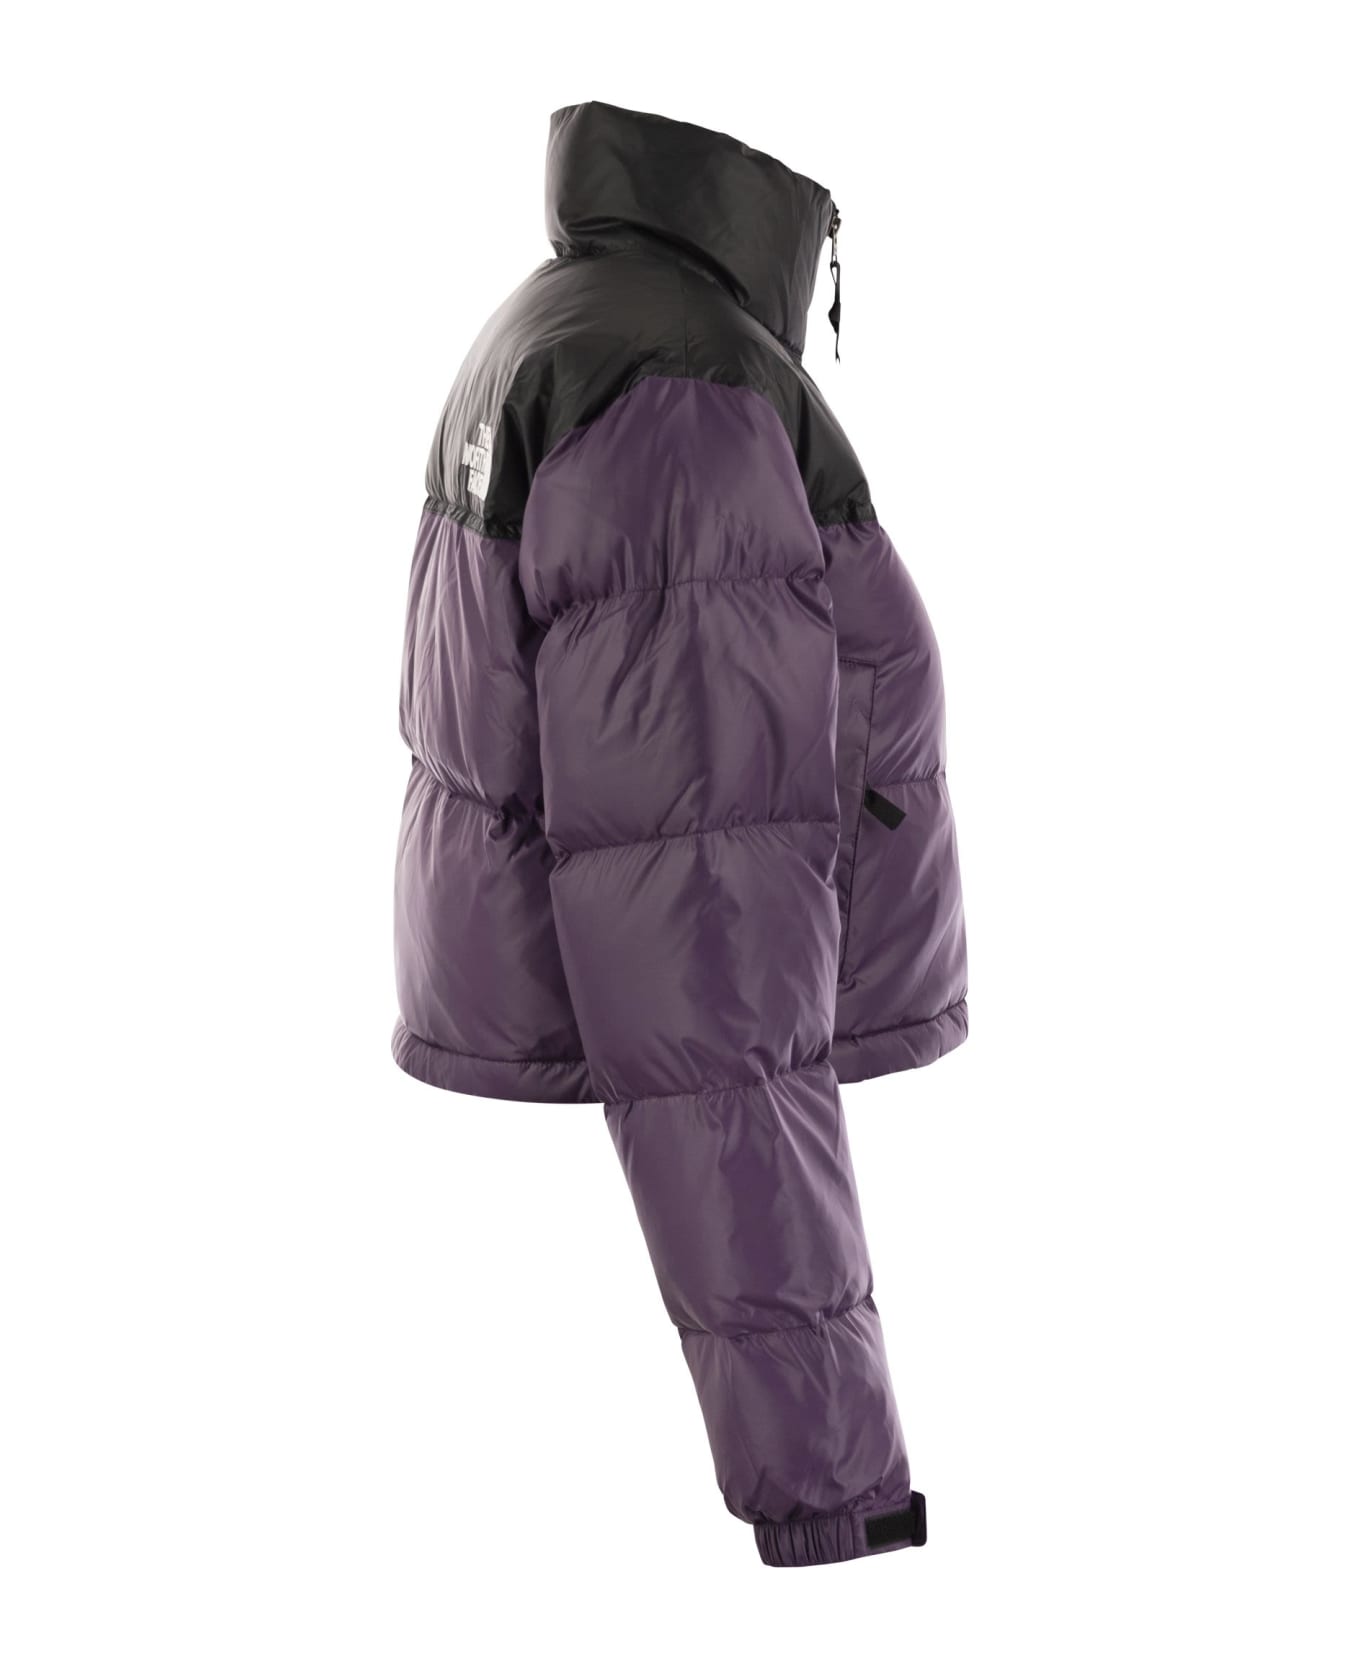 The North Face 1996 Retro Nuptse Short Down Jacket - Black currant